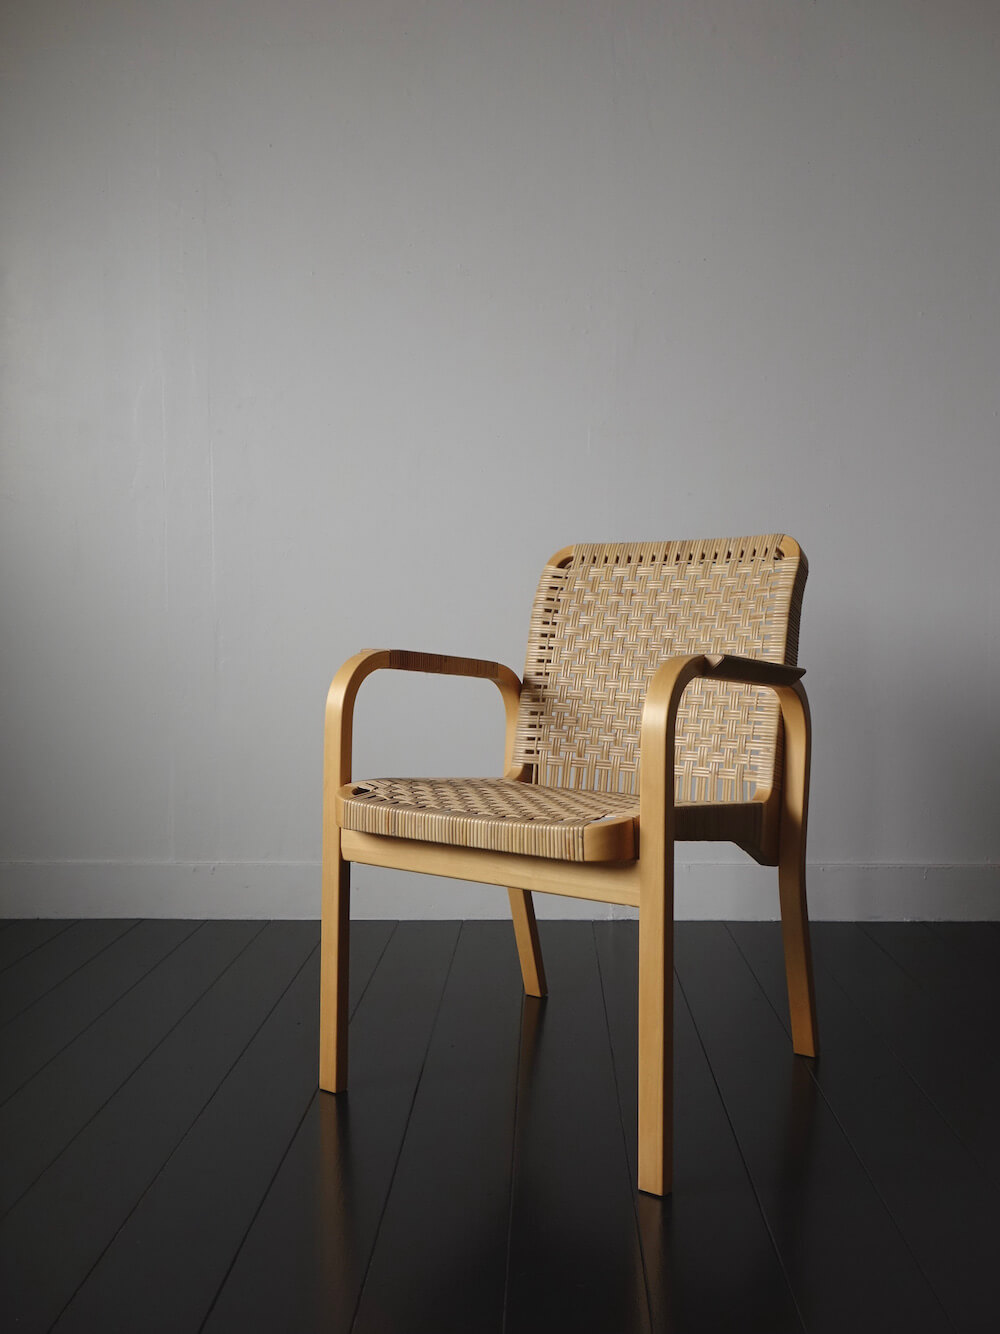 No.45 Arm chair by Alvar Aalto for Artek